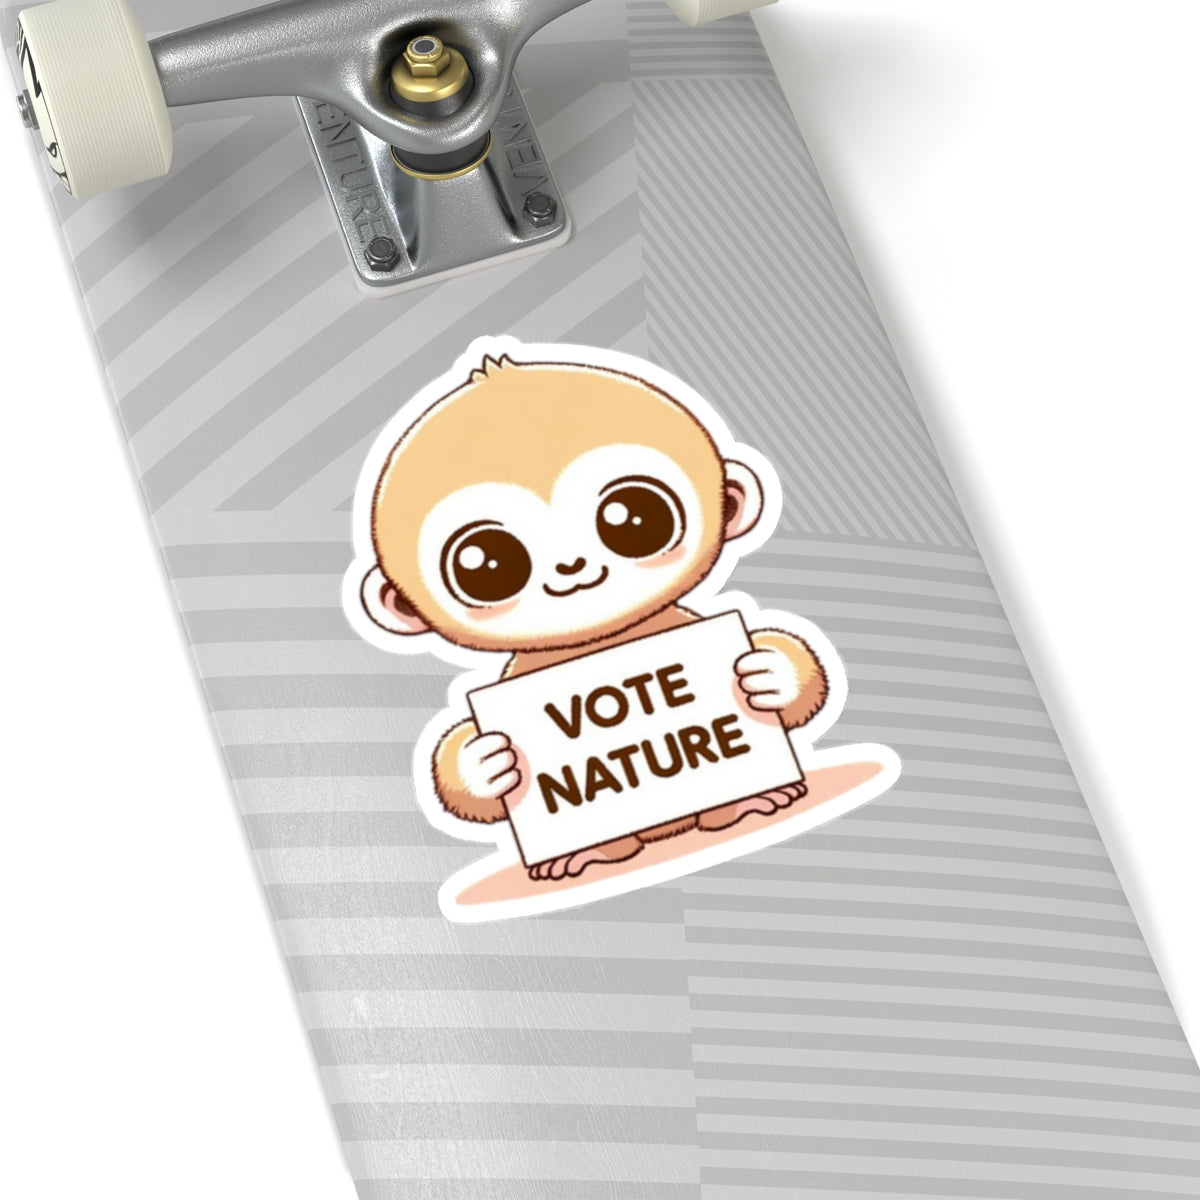 Inspirational Cute Gibbon Ape Statement vinyl Sticker: Vote Nature! for laptop, kindle, phone, ipad, instrument case, notebook, mood board